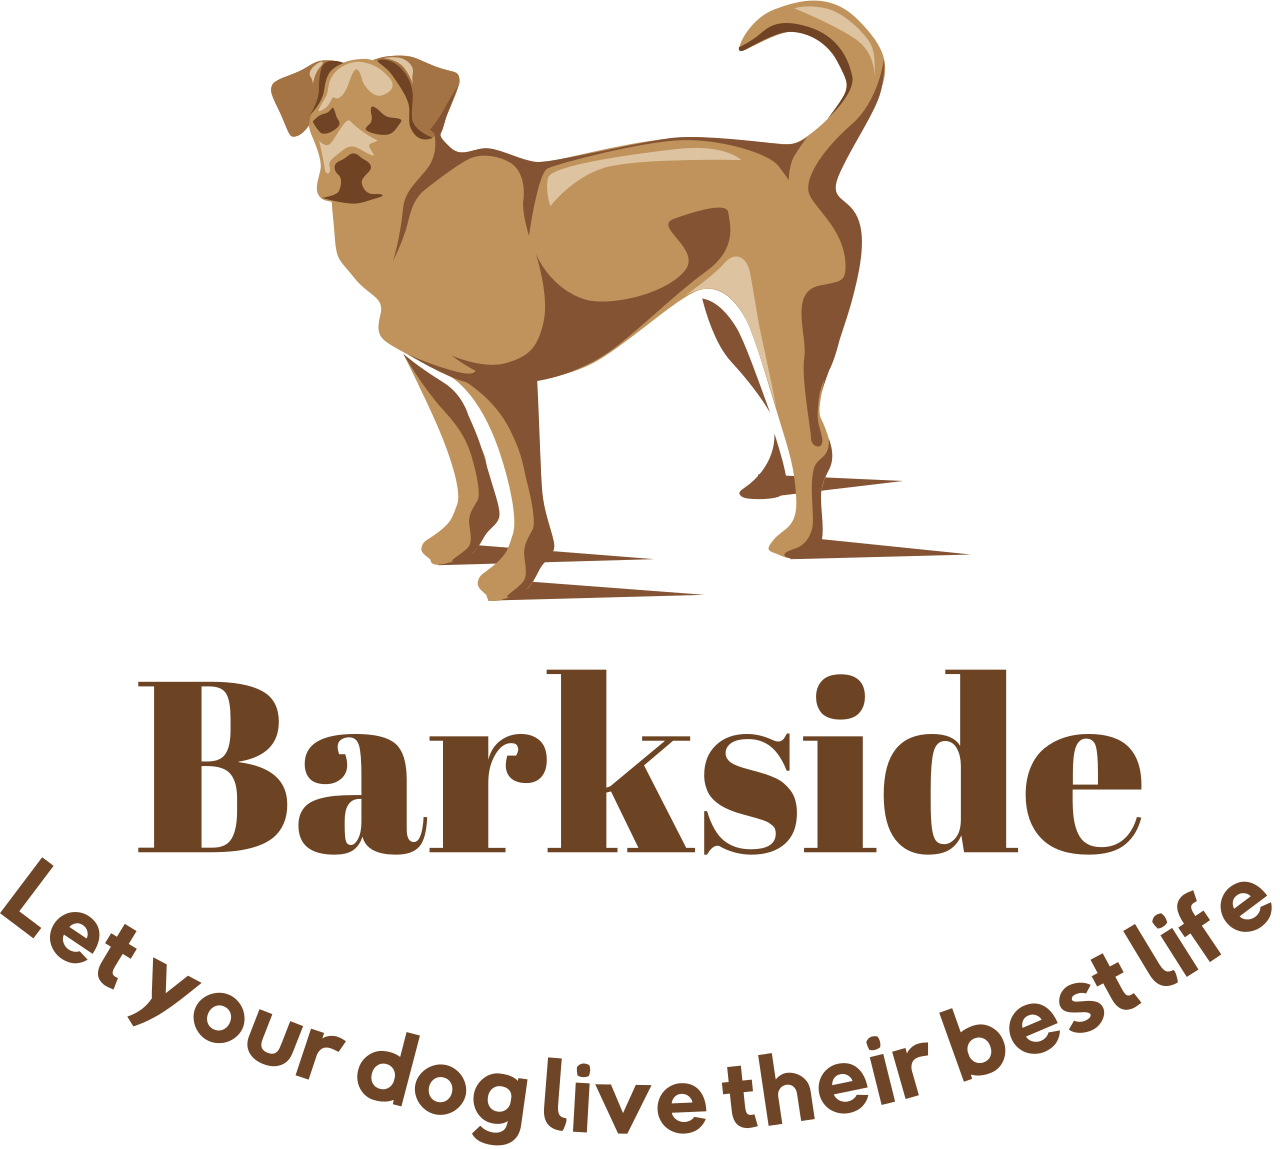 Barkside's logo